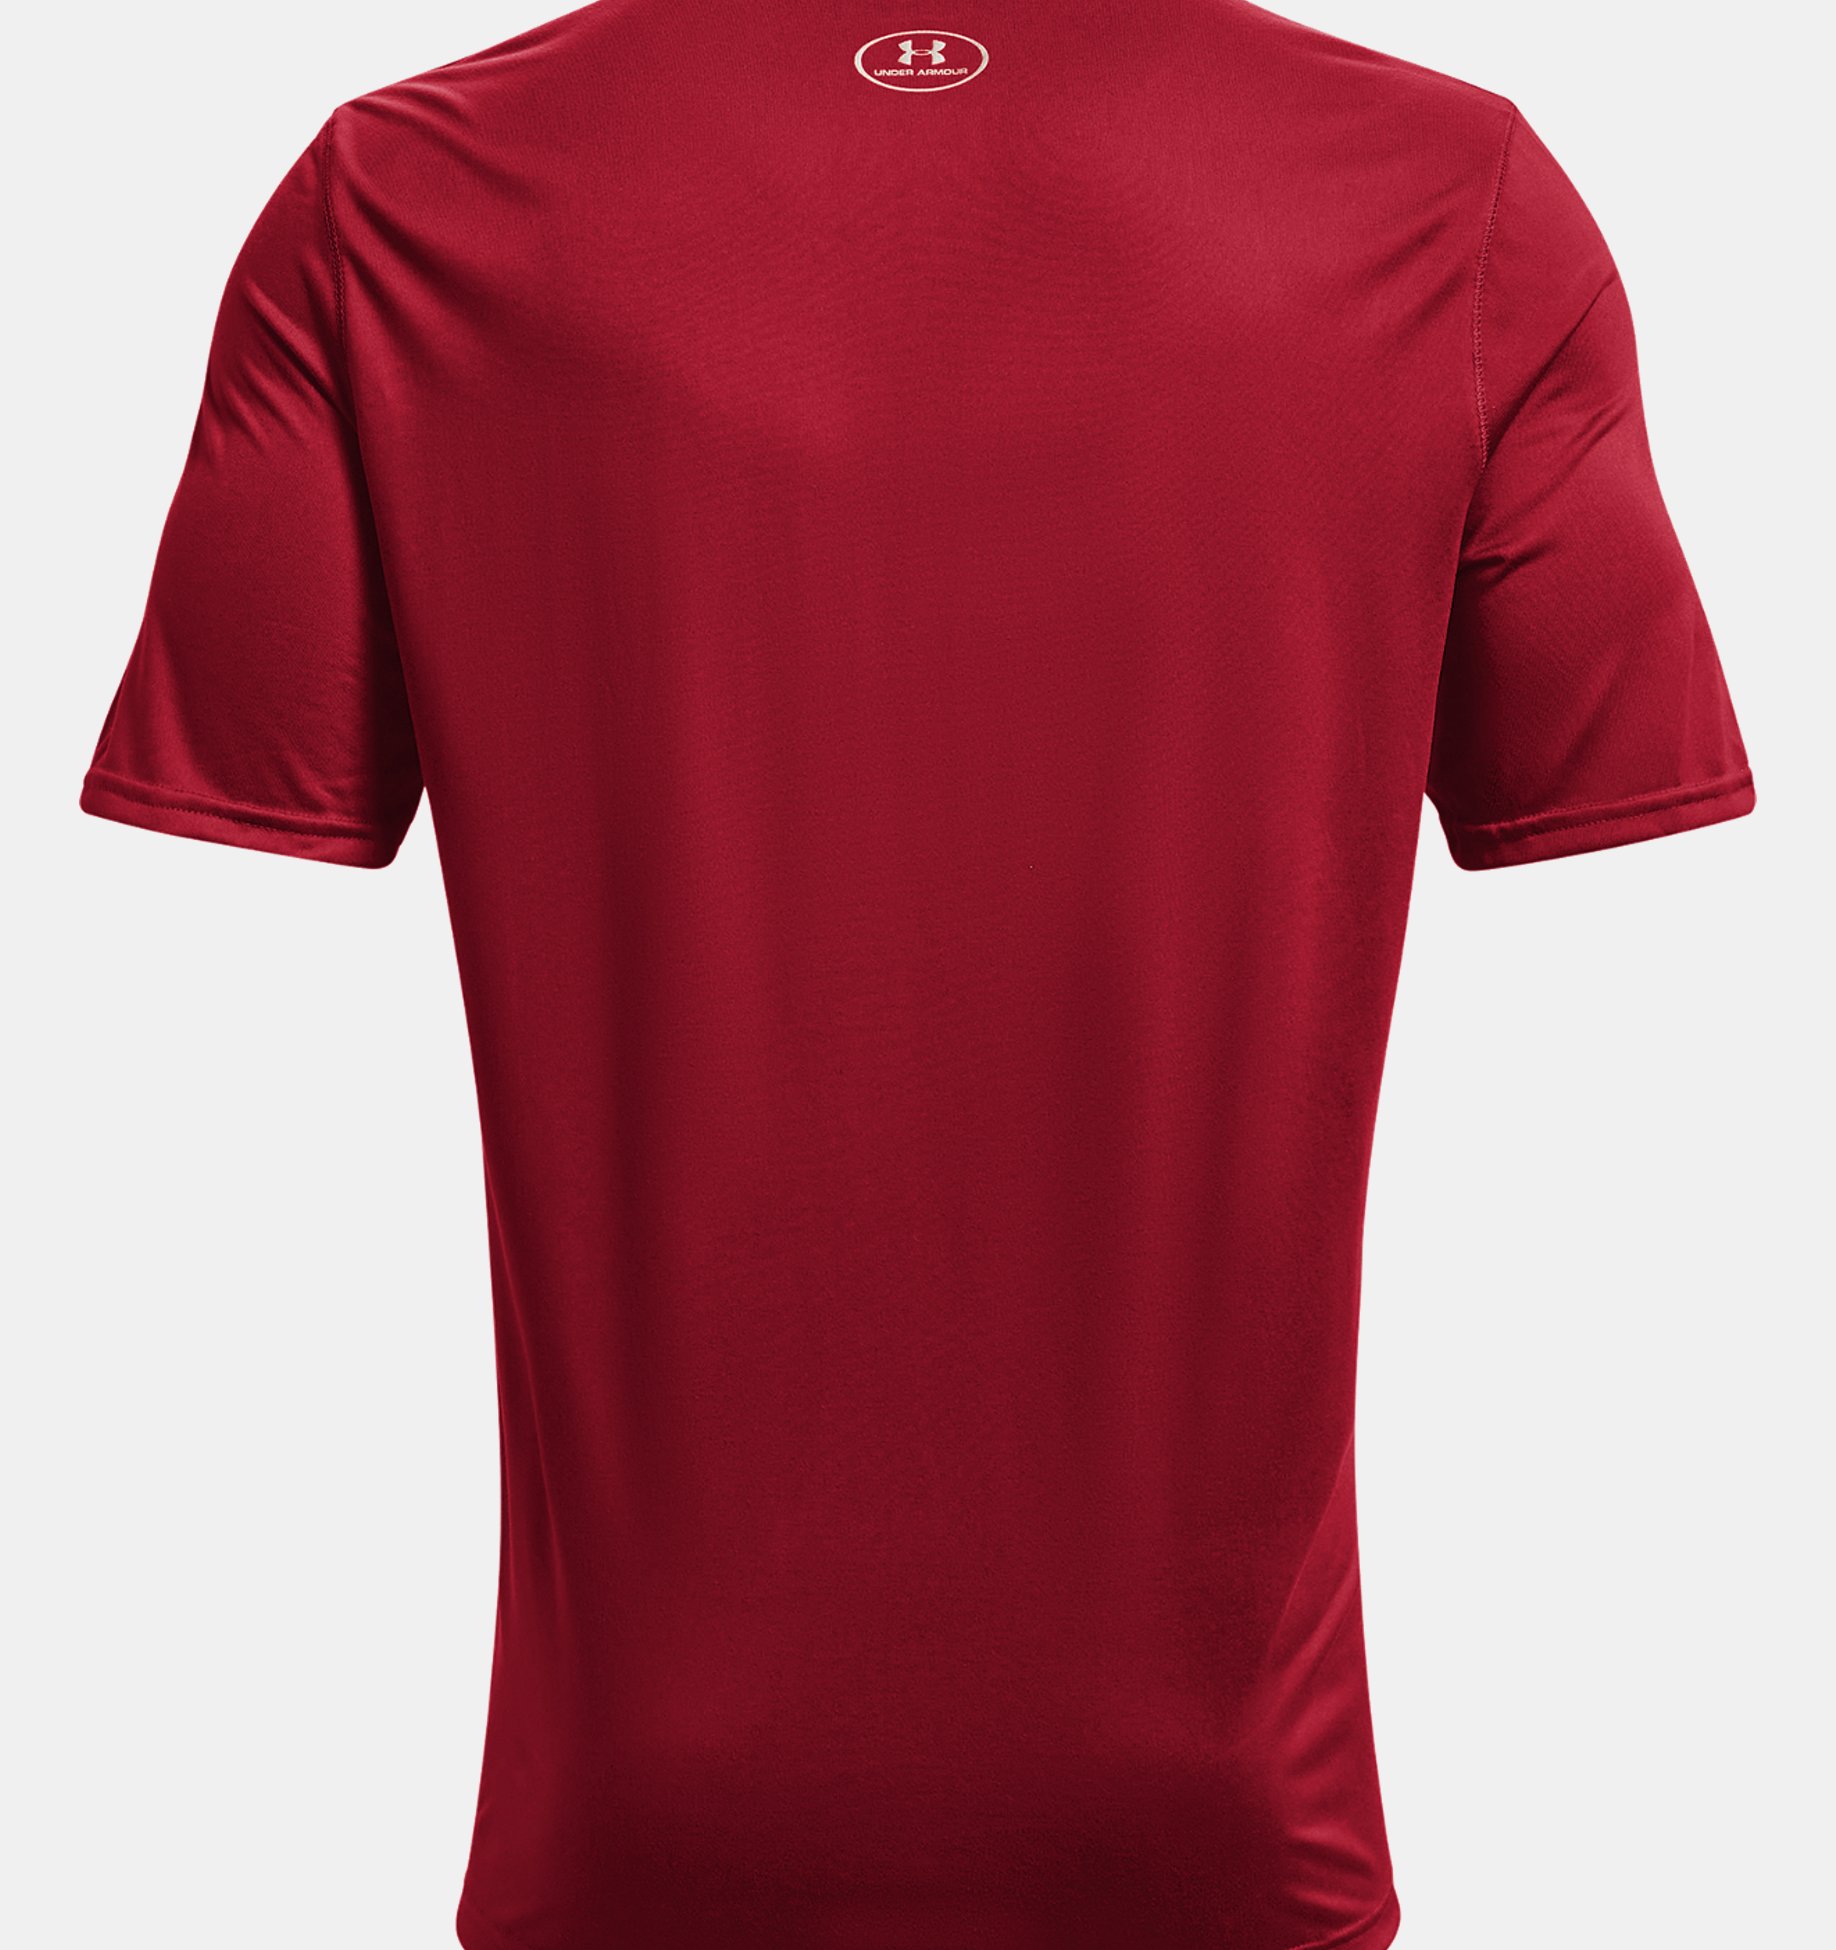 Under Armour Men's UA Tech Locker 2.0 T-Shirt Short Sleeve Athletic Flawless Red 